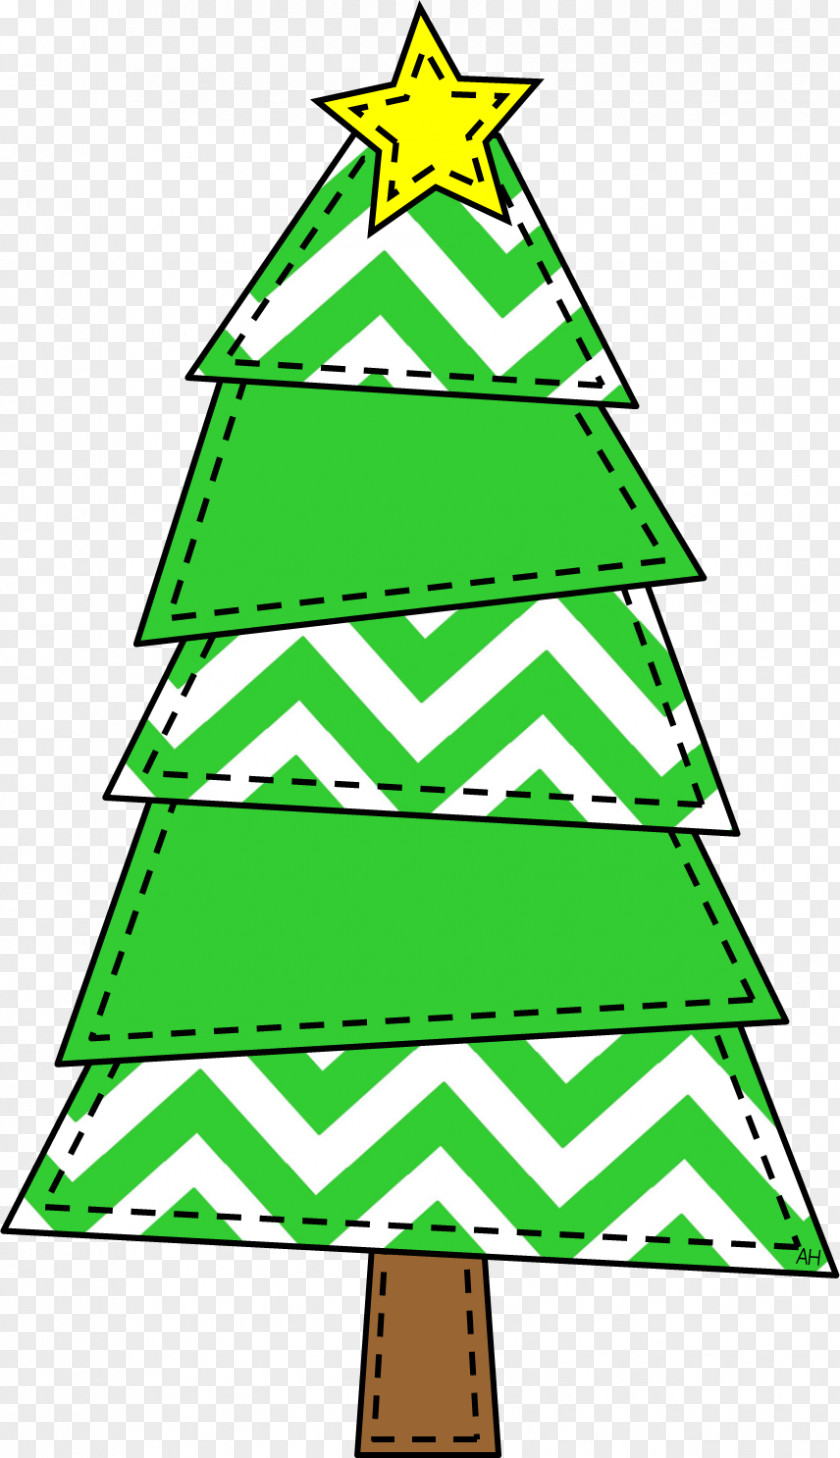 School Tree Cliparts Graphic Frames Santa Claus Christmas Clip Art PNG